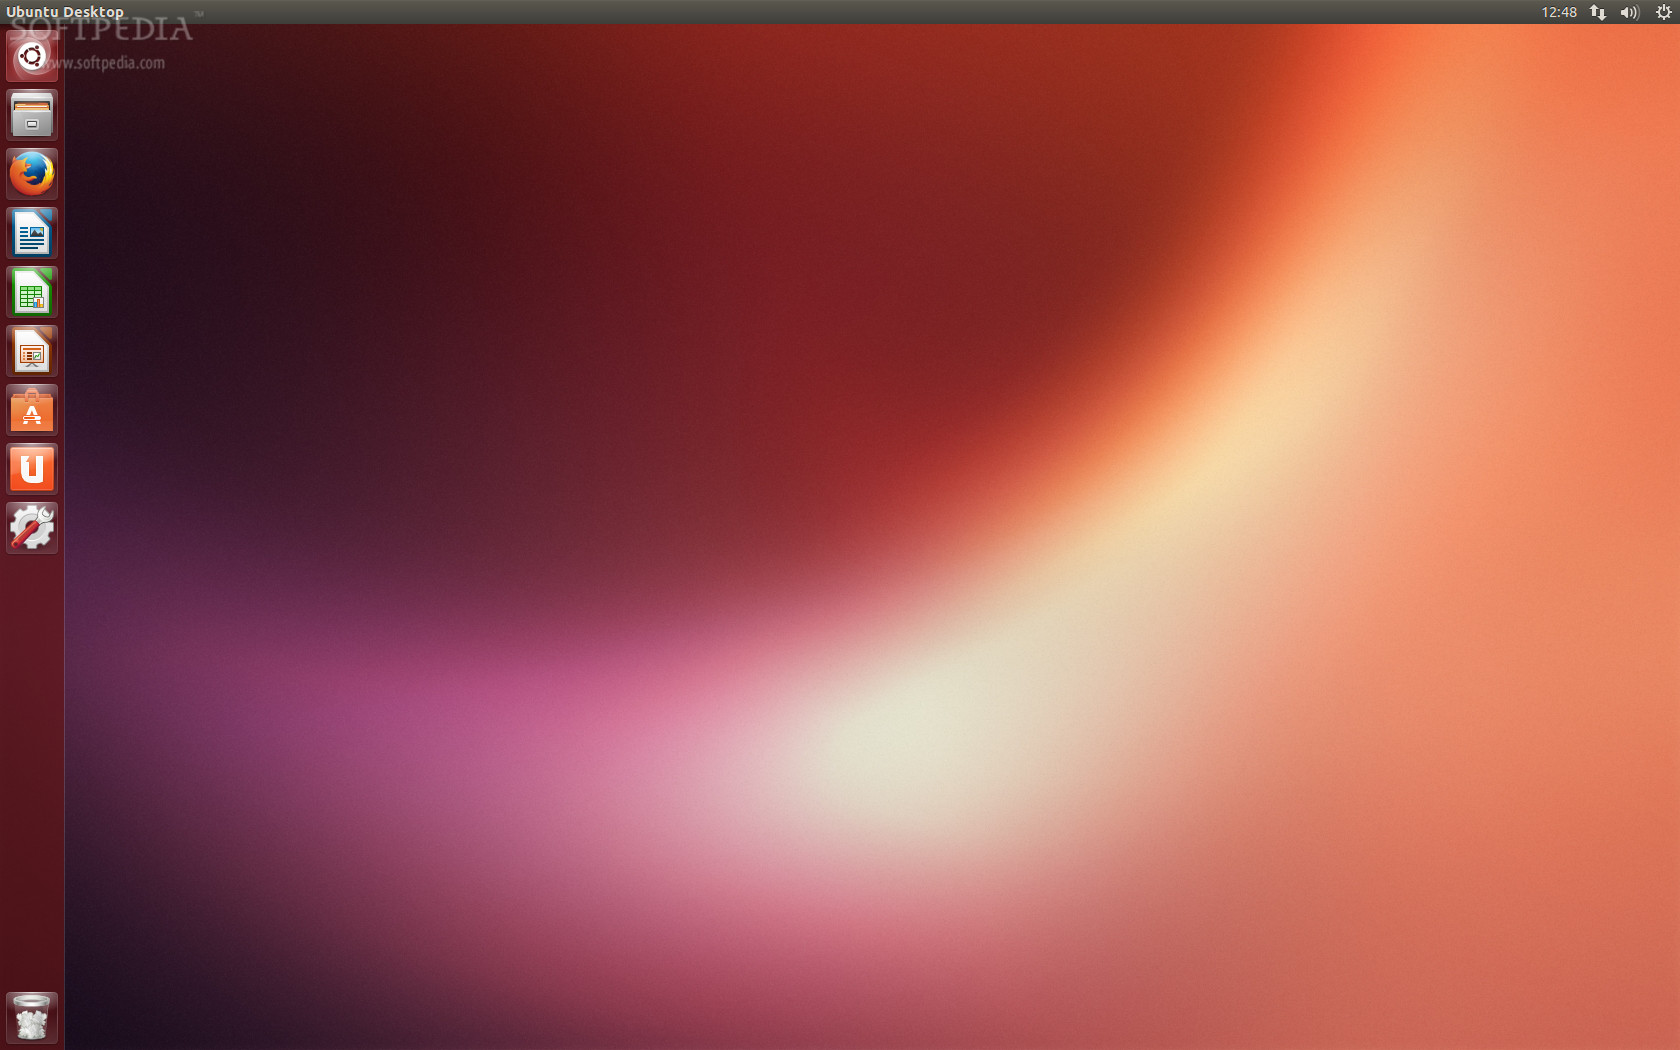 Ubuntu-13-10-Is-Now-Based-on-the-Latest-Stable-Linux-Kernel-3-10-2.jpg